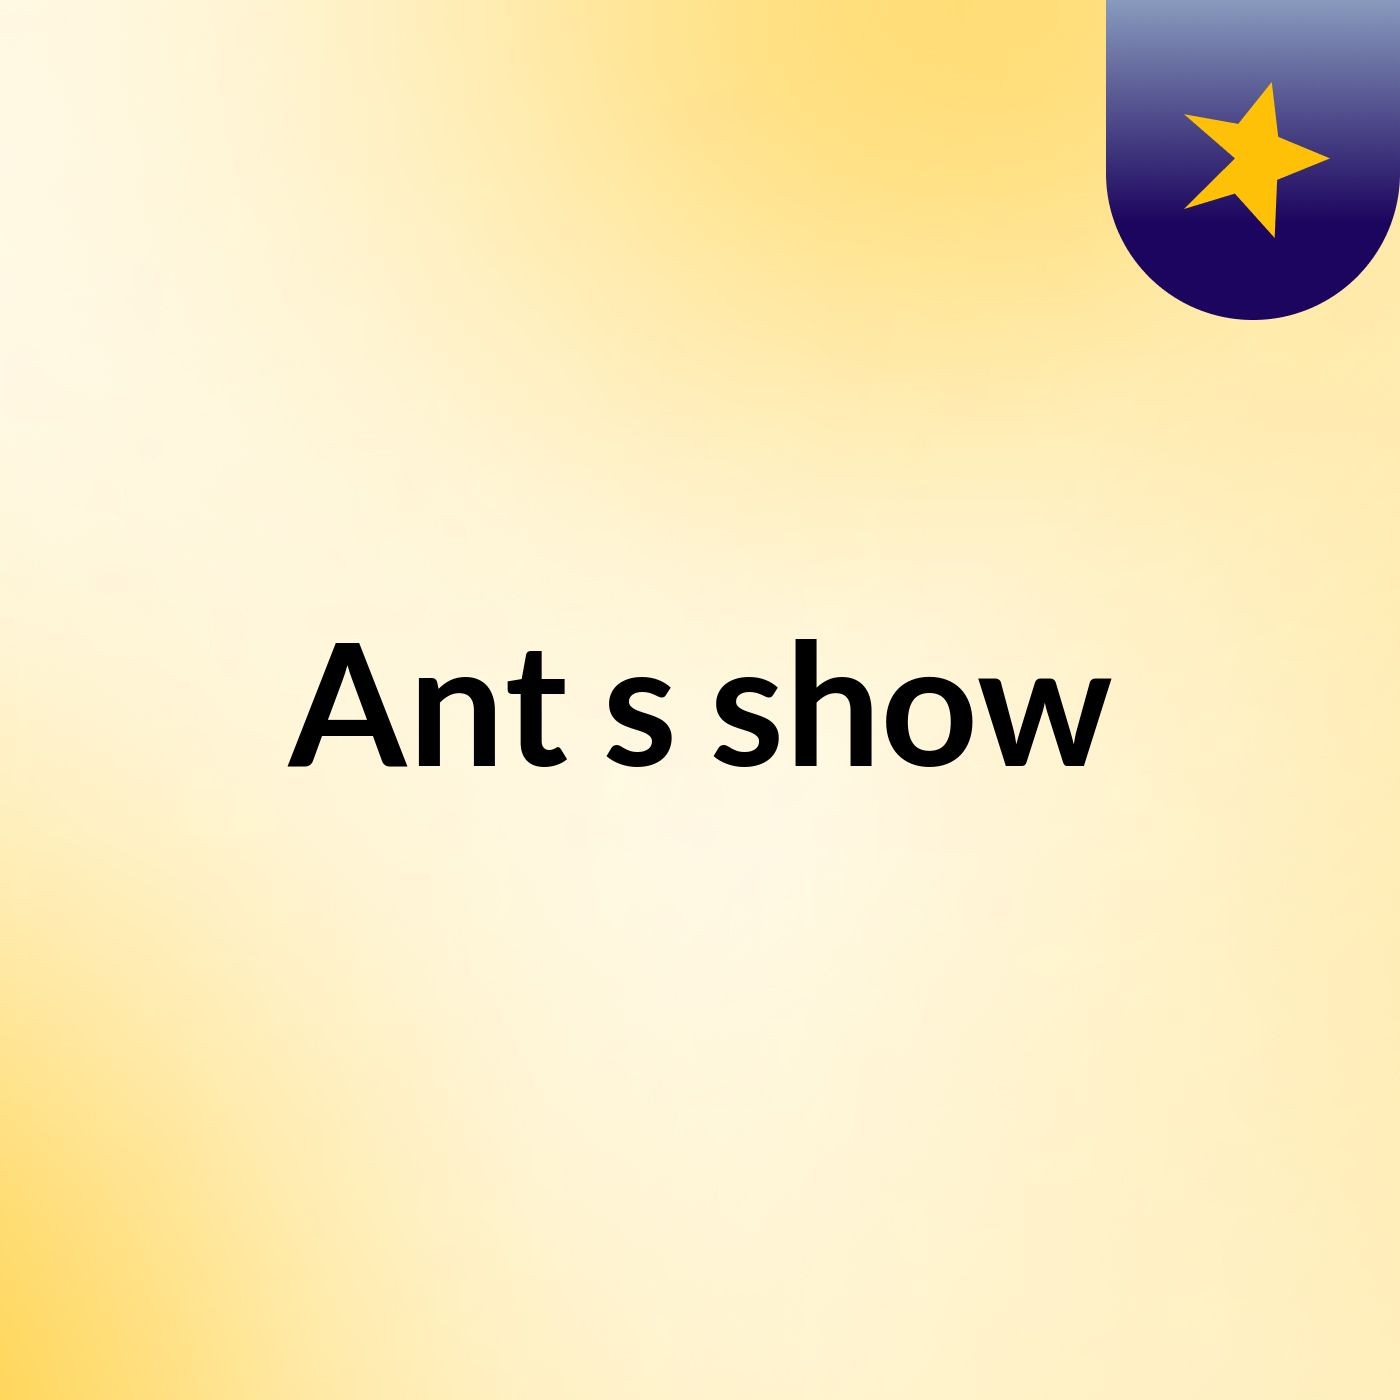 Ant's show